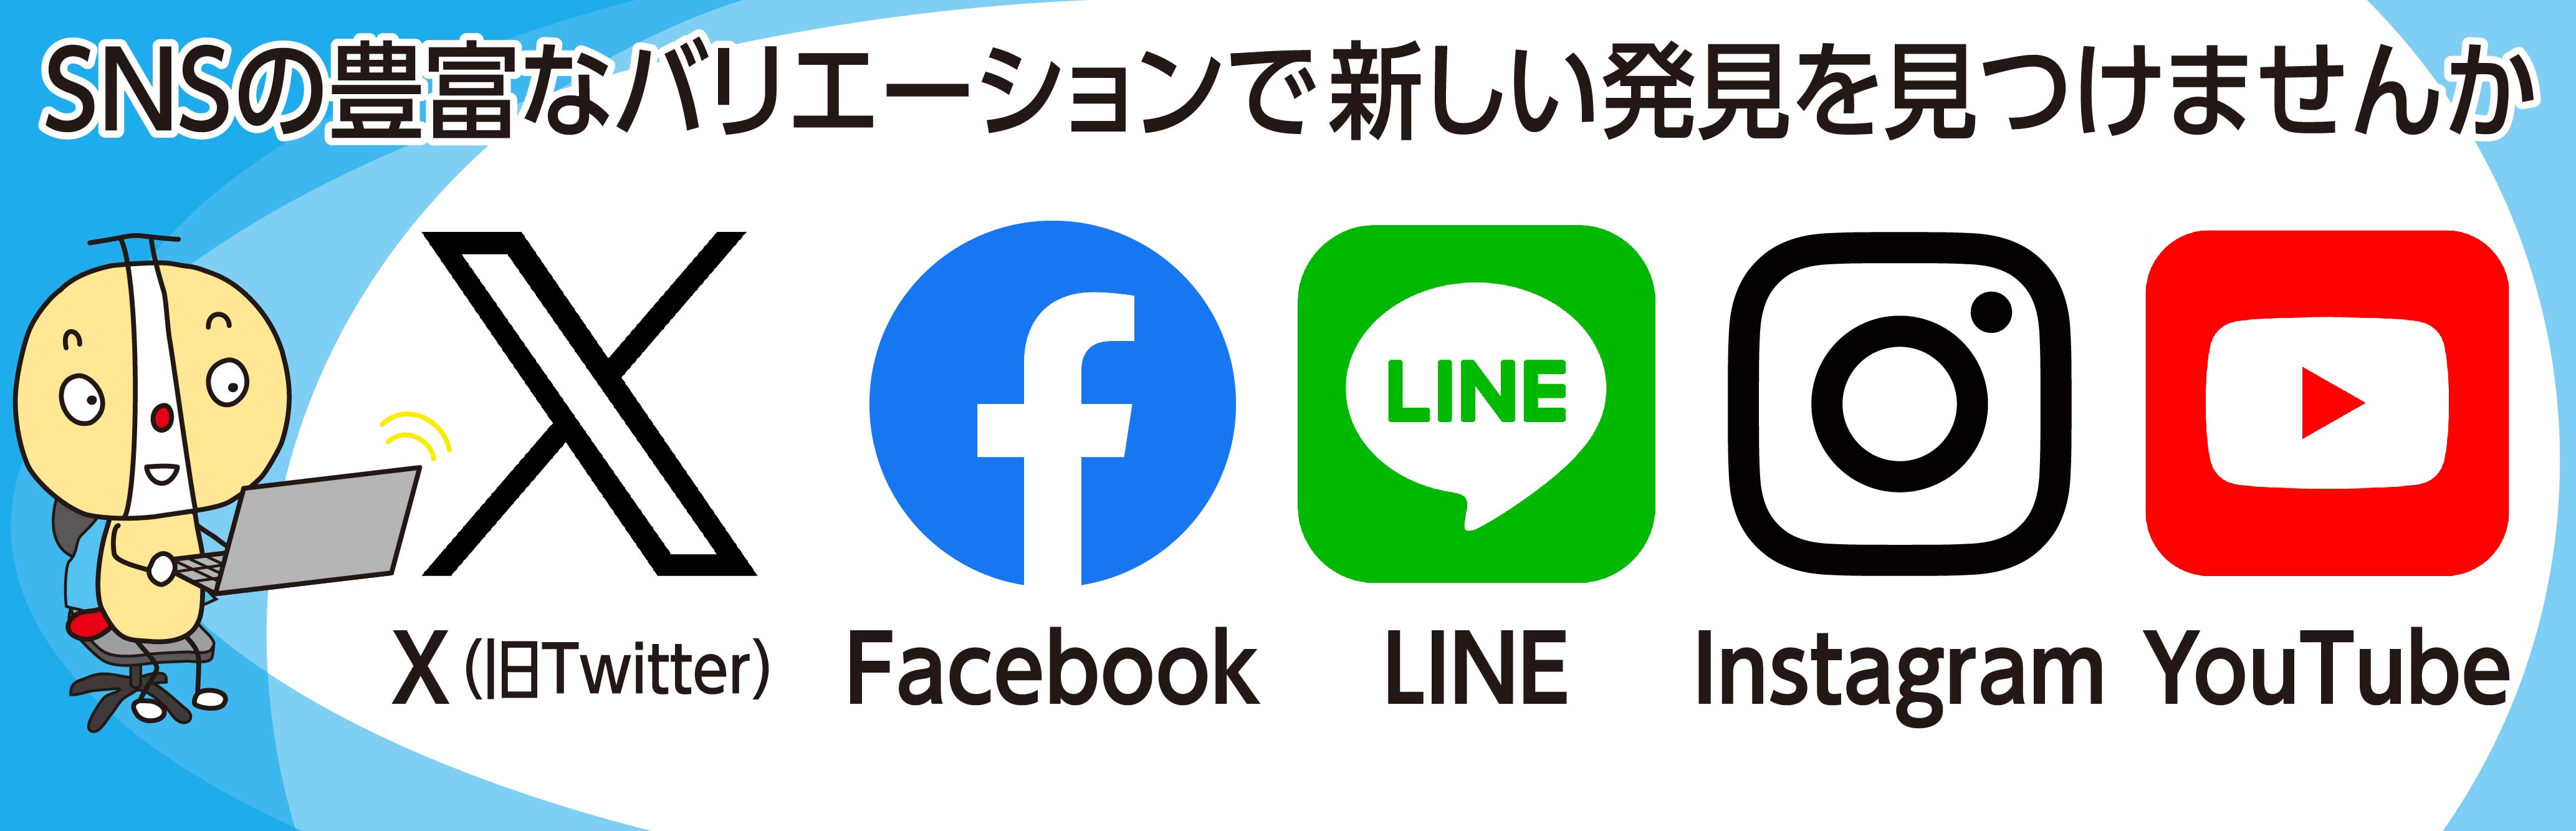 X・Facebook・LINE